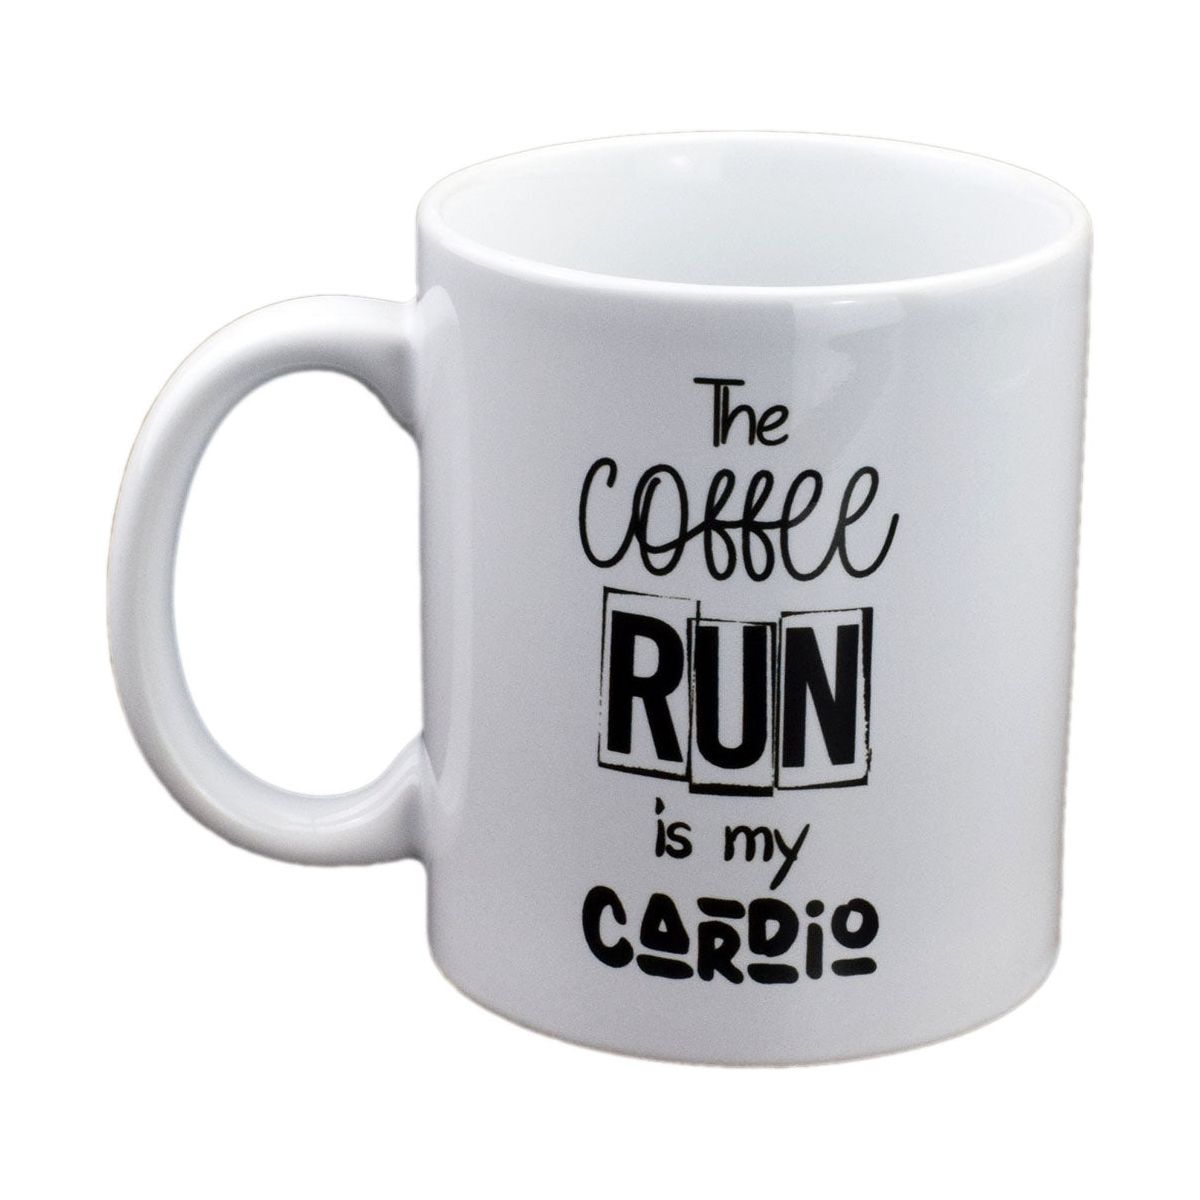 The Coffee Run is my Cardio Design Mug - Ashton and Finch